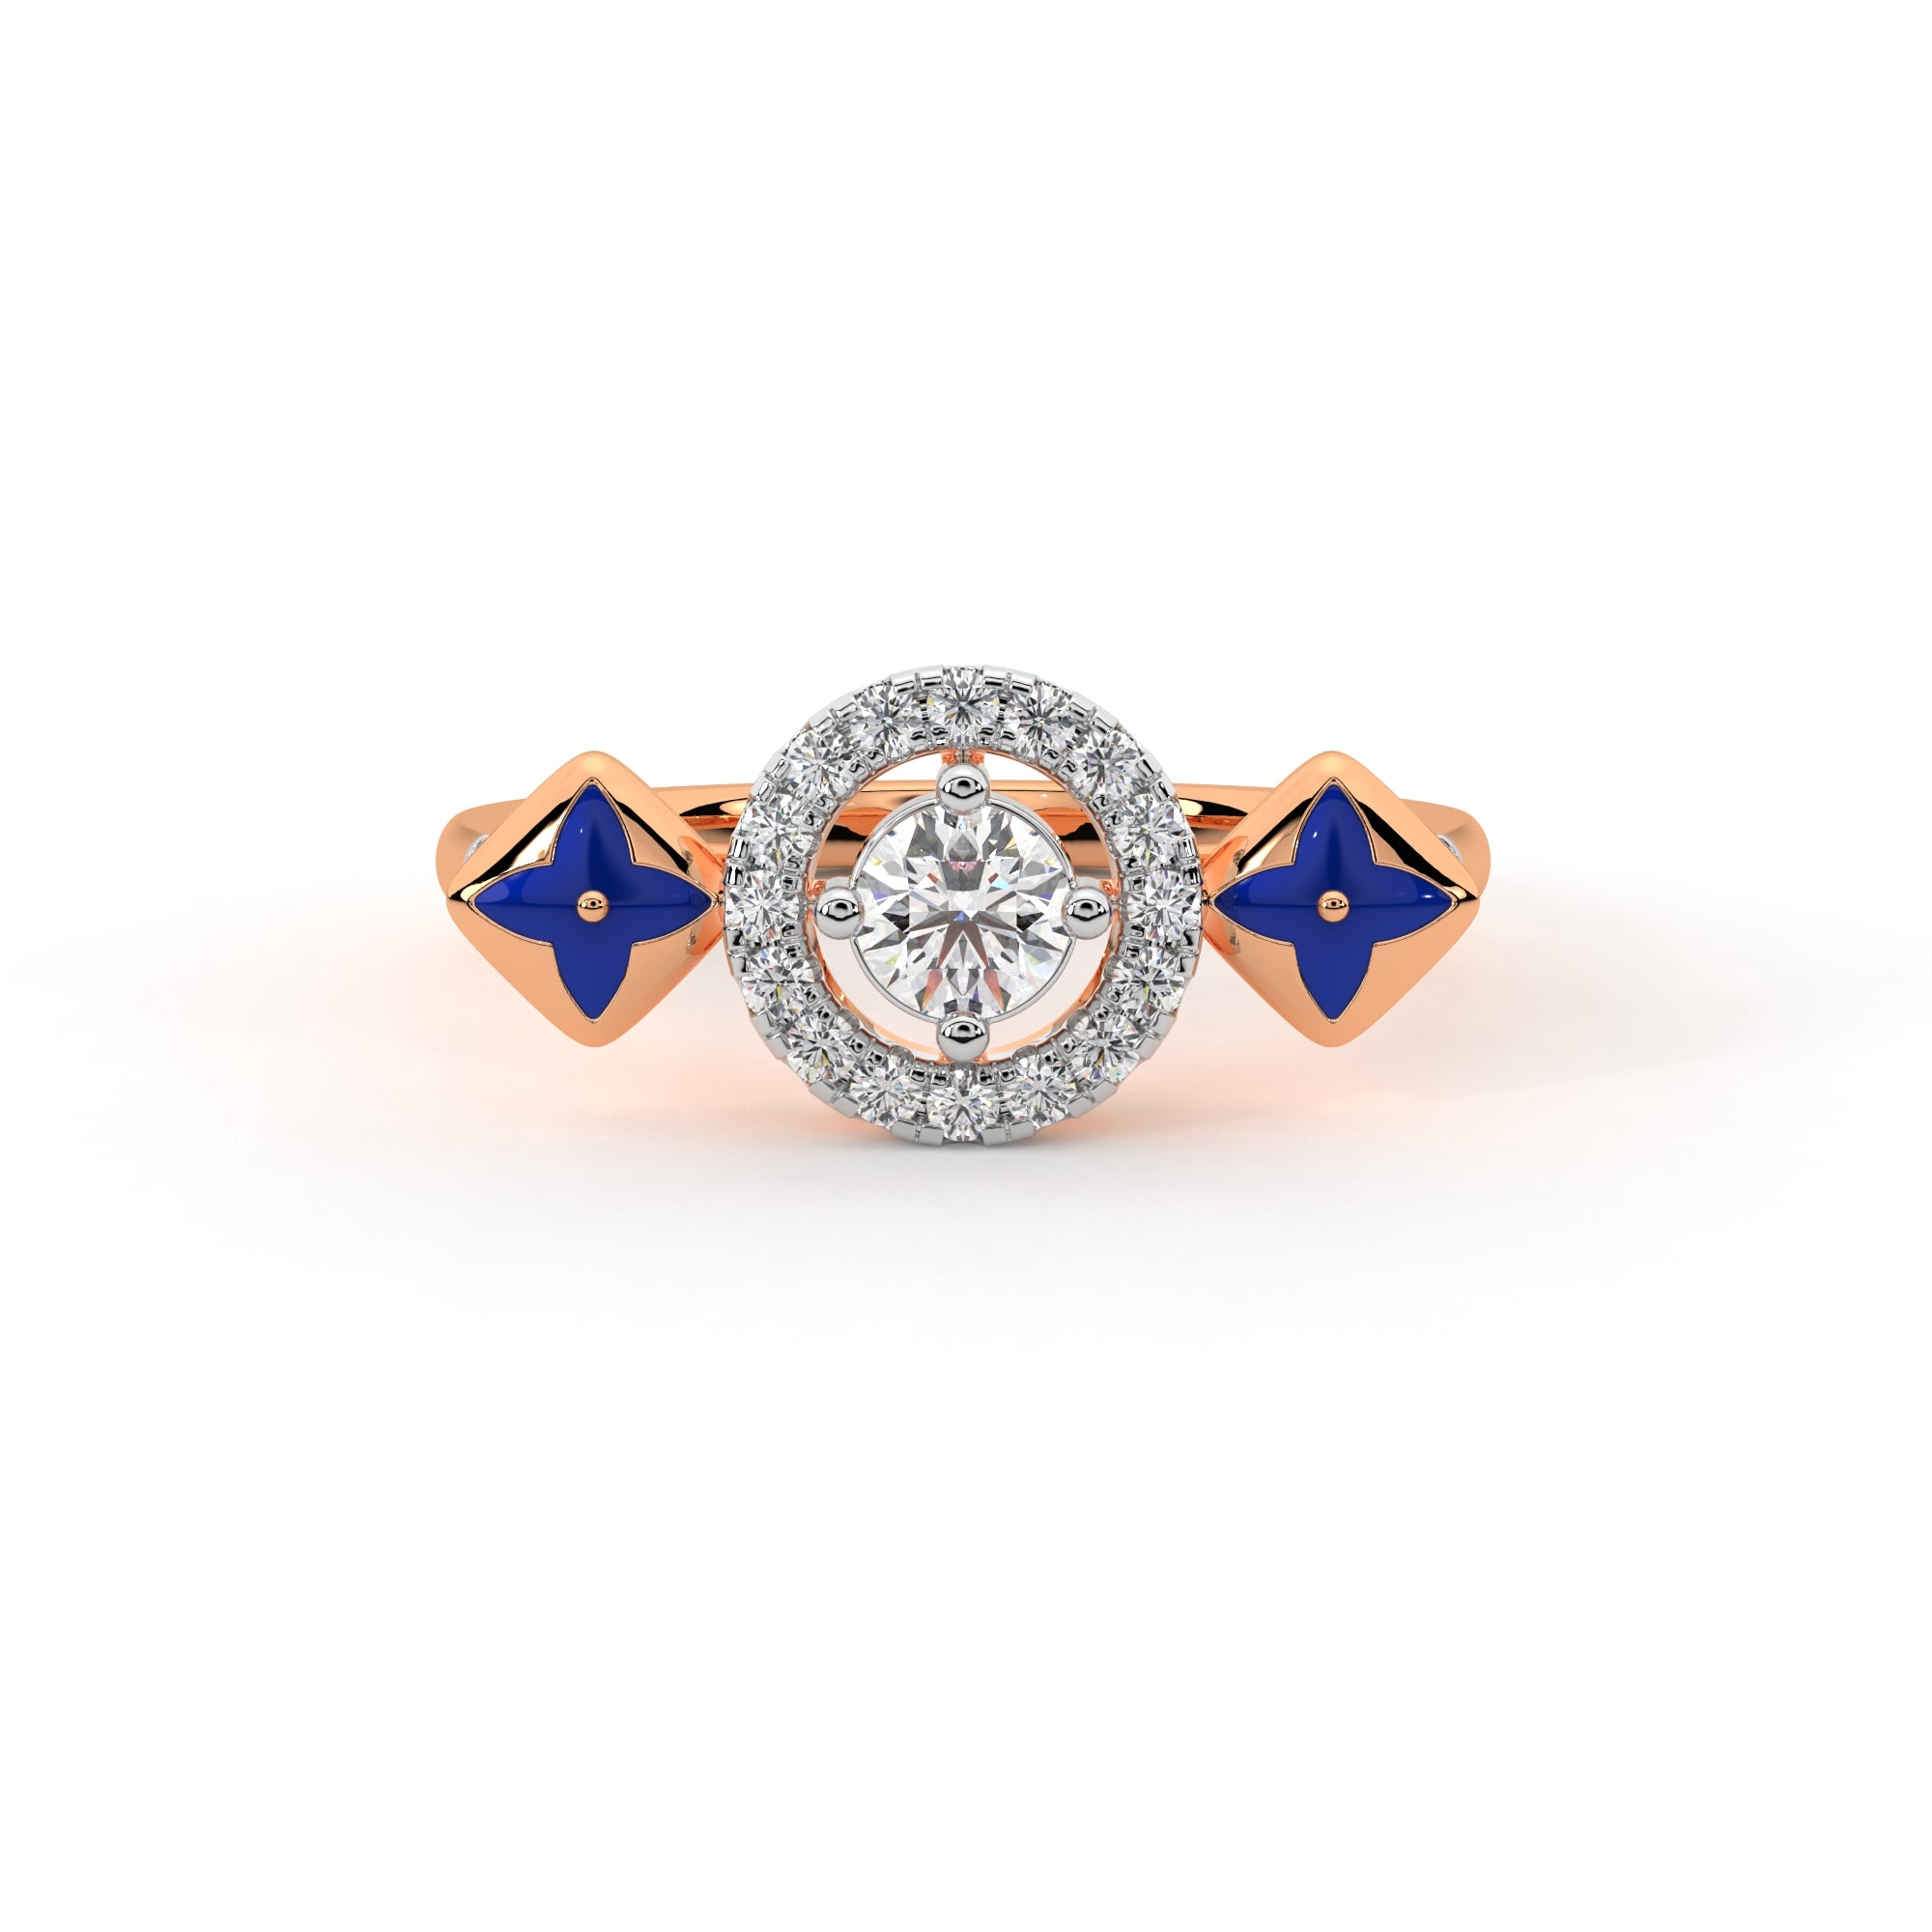 Graceful Elongated Diamond Ring (Rose Gold)